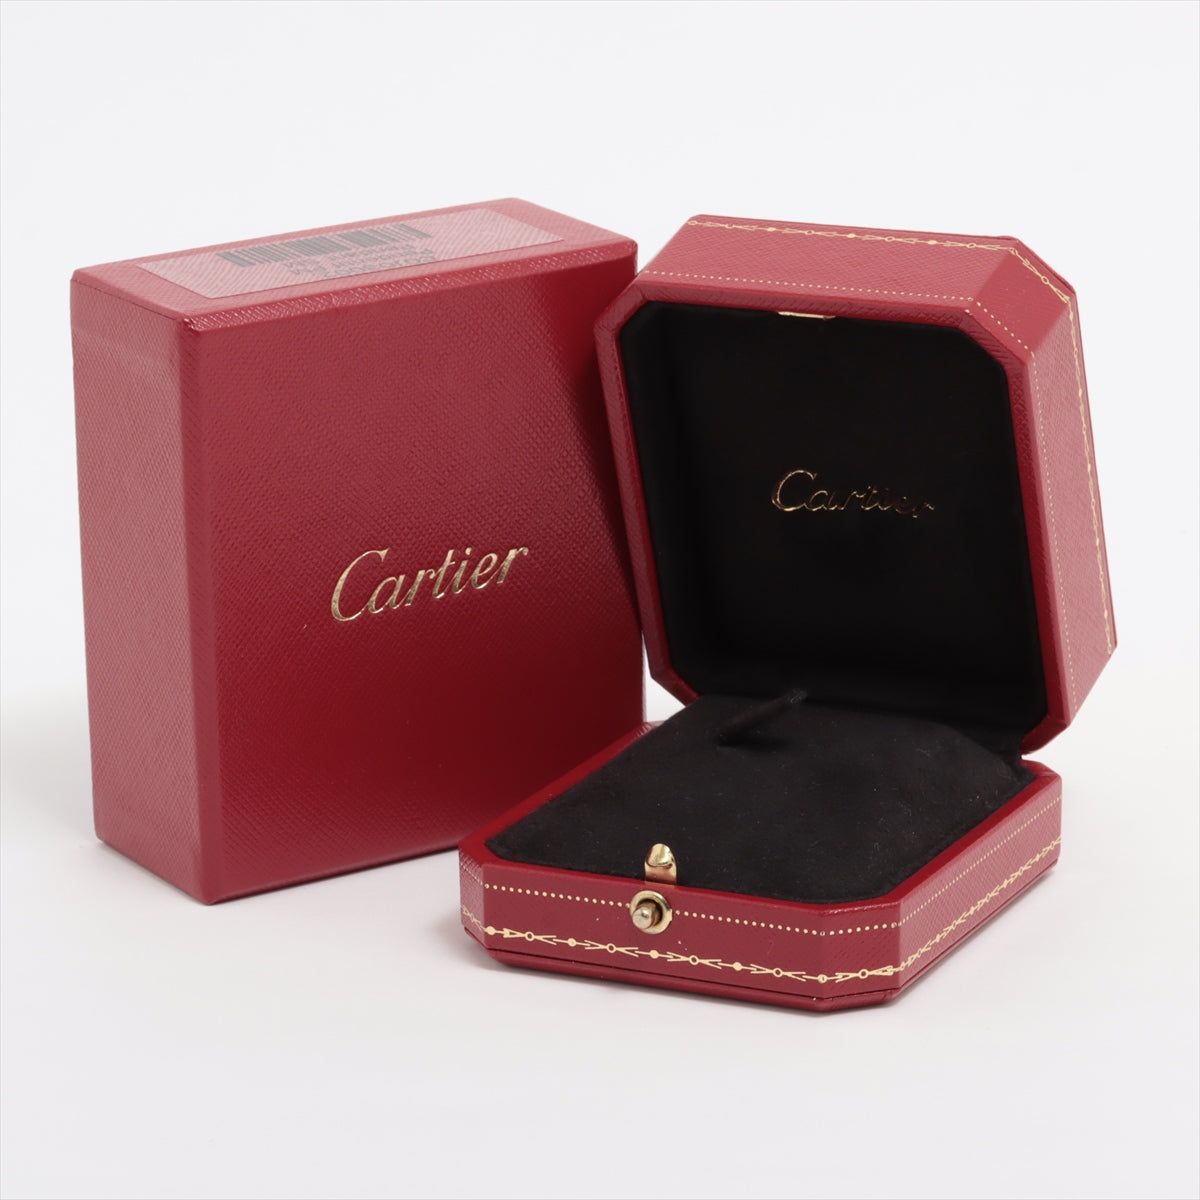 Cartier 2C diamond Charm 750(WG) 2.6g